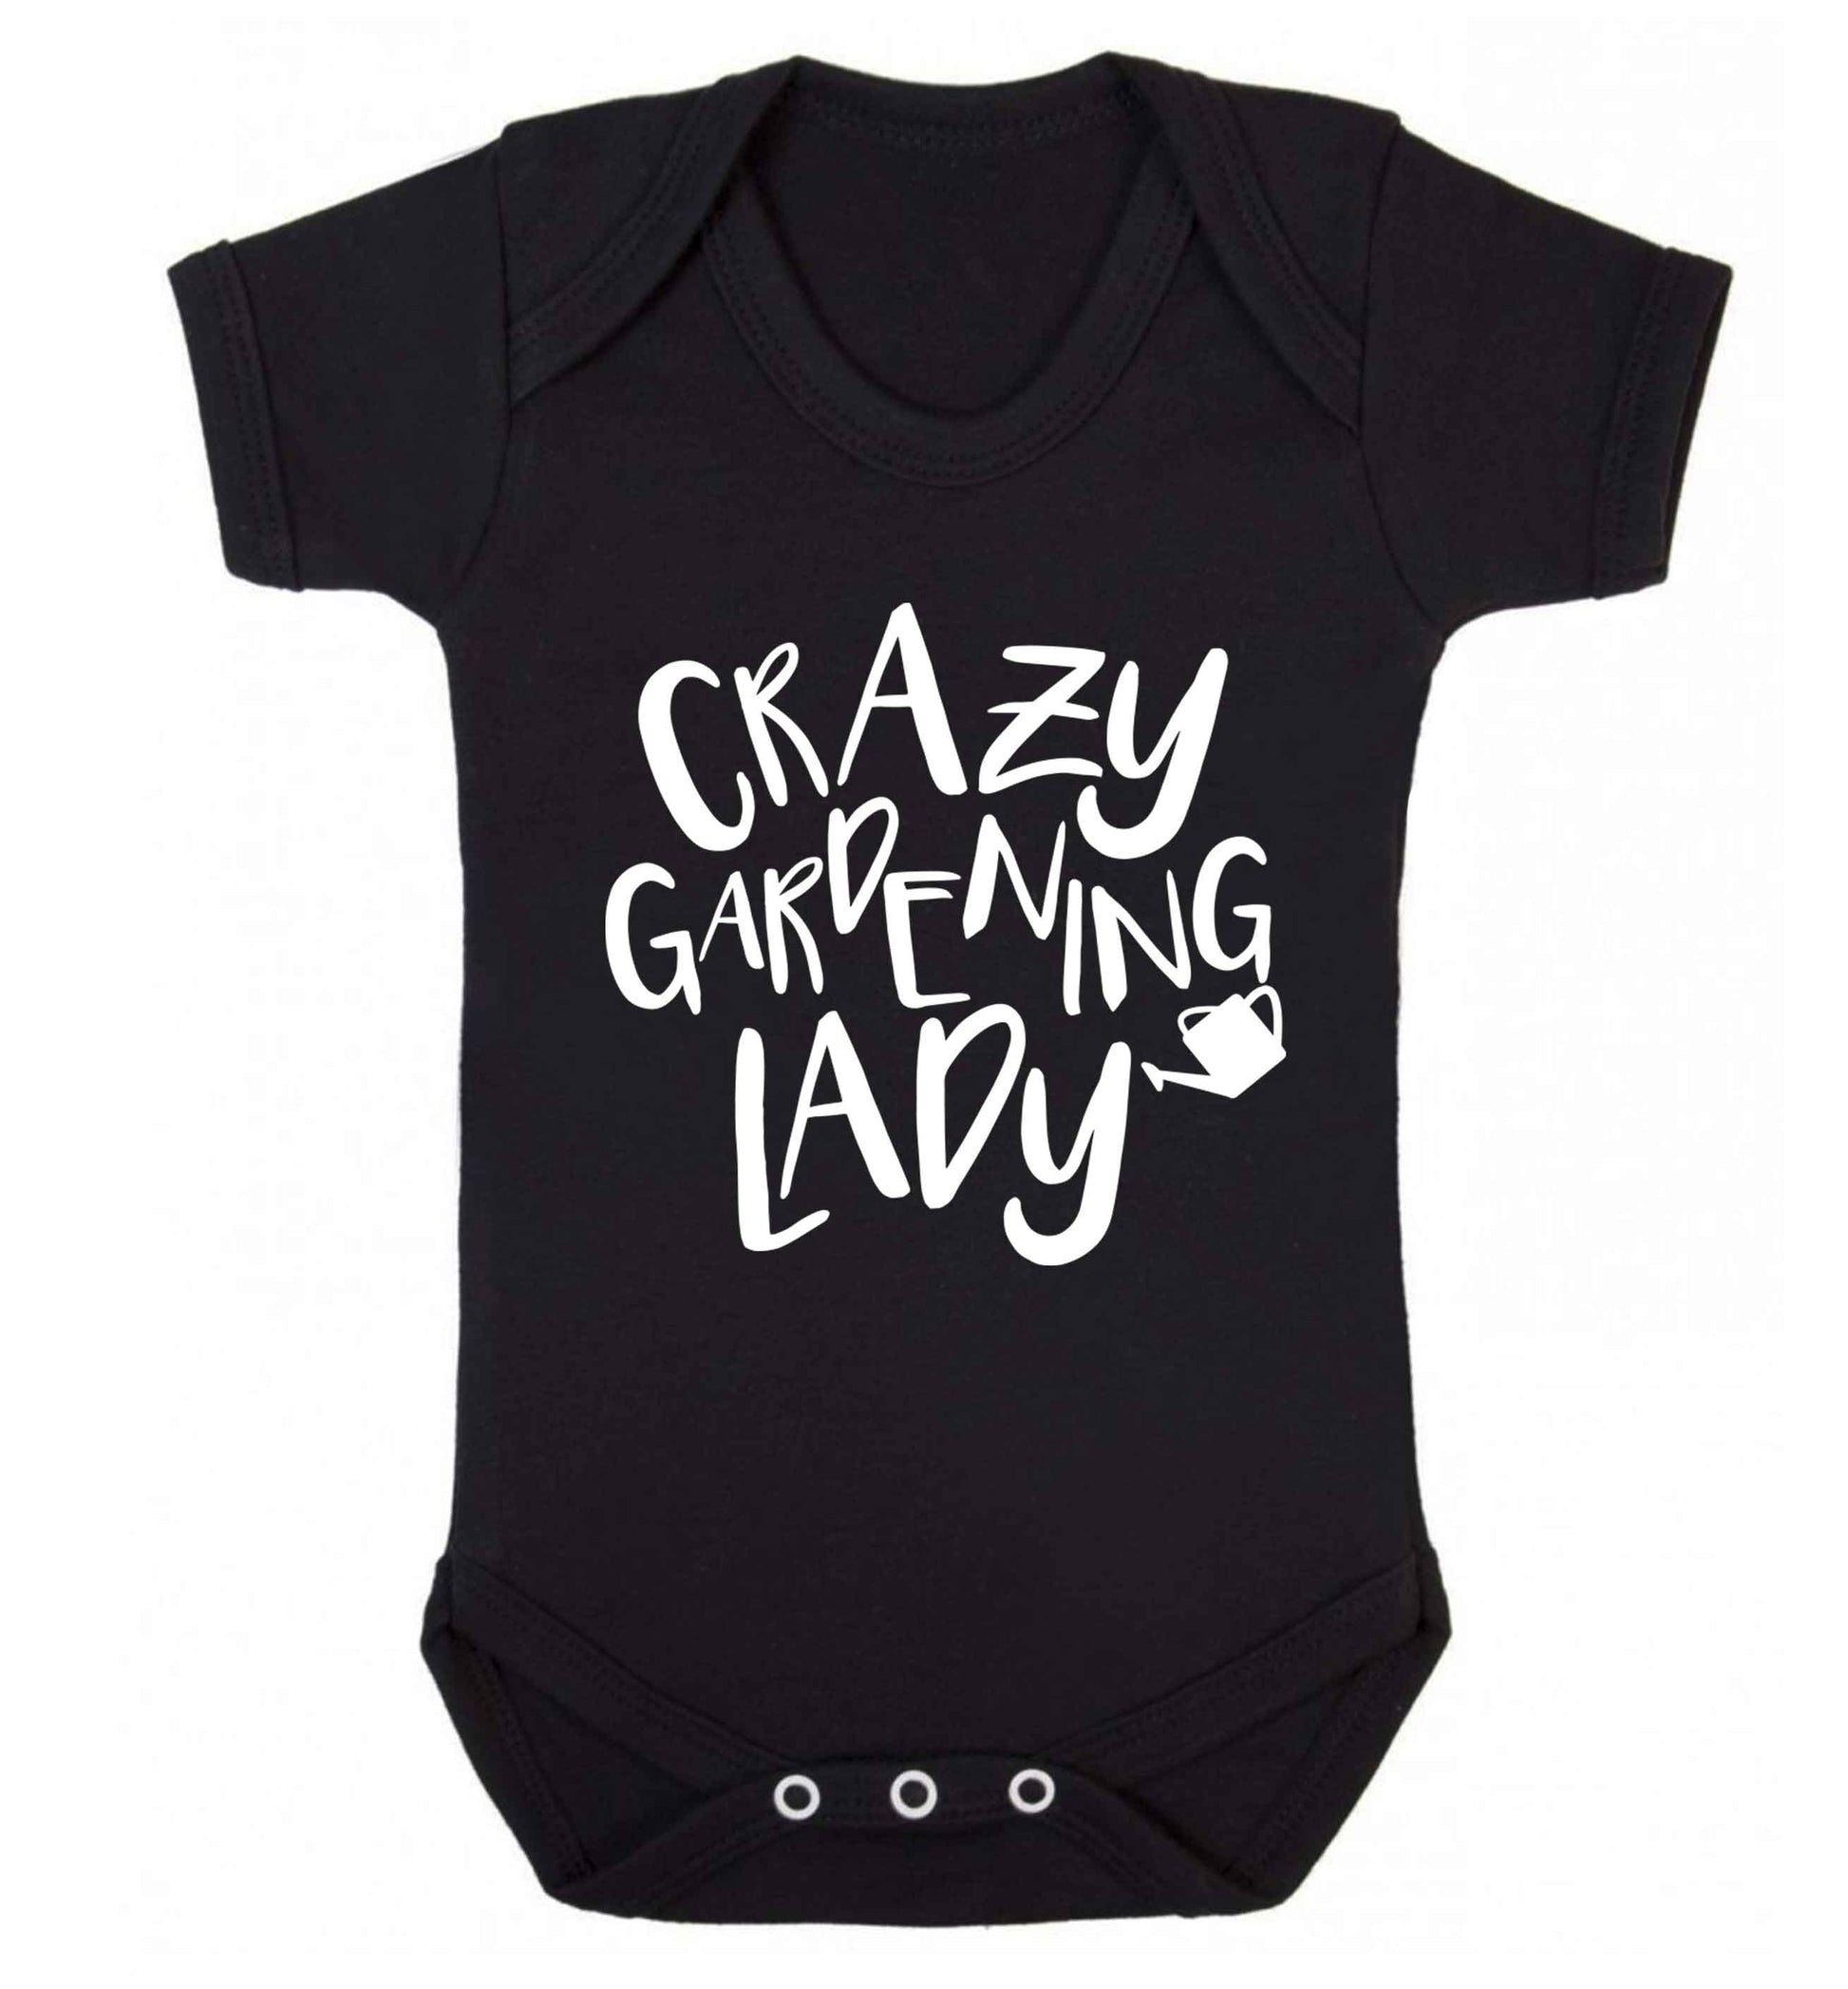 Crazy gardening lady Baby Vest black 18-24 months